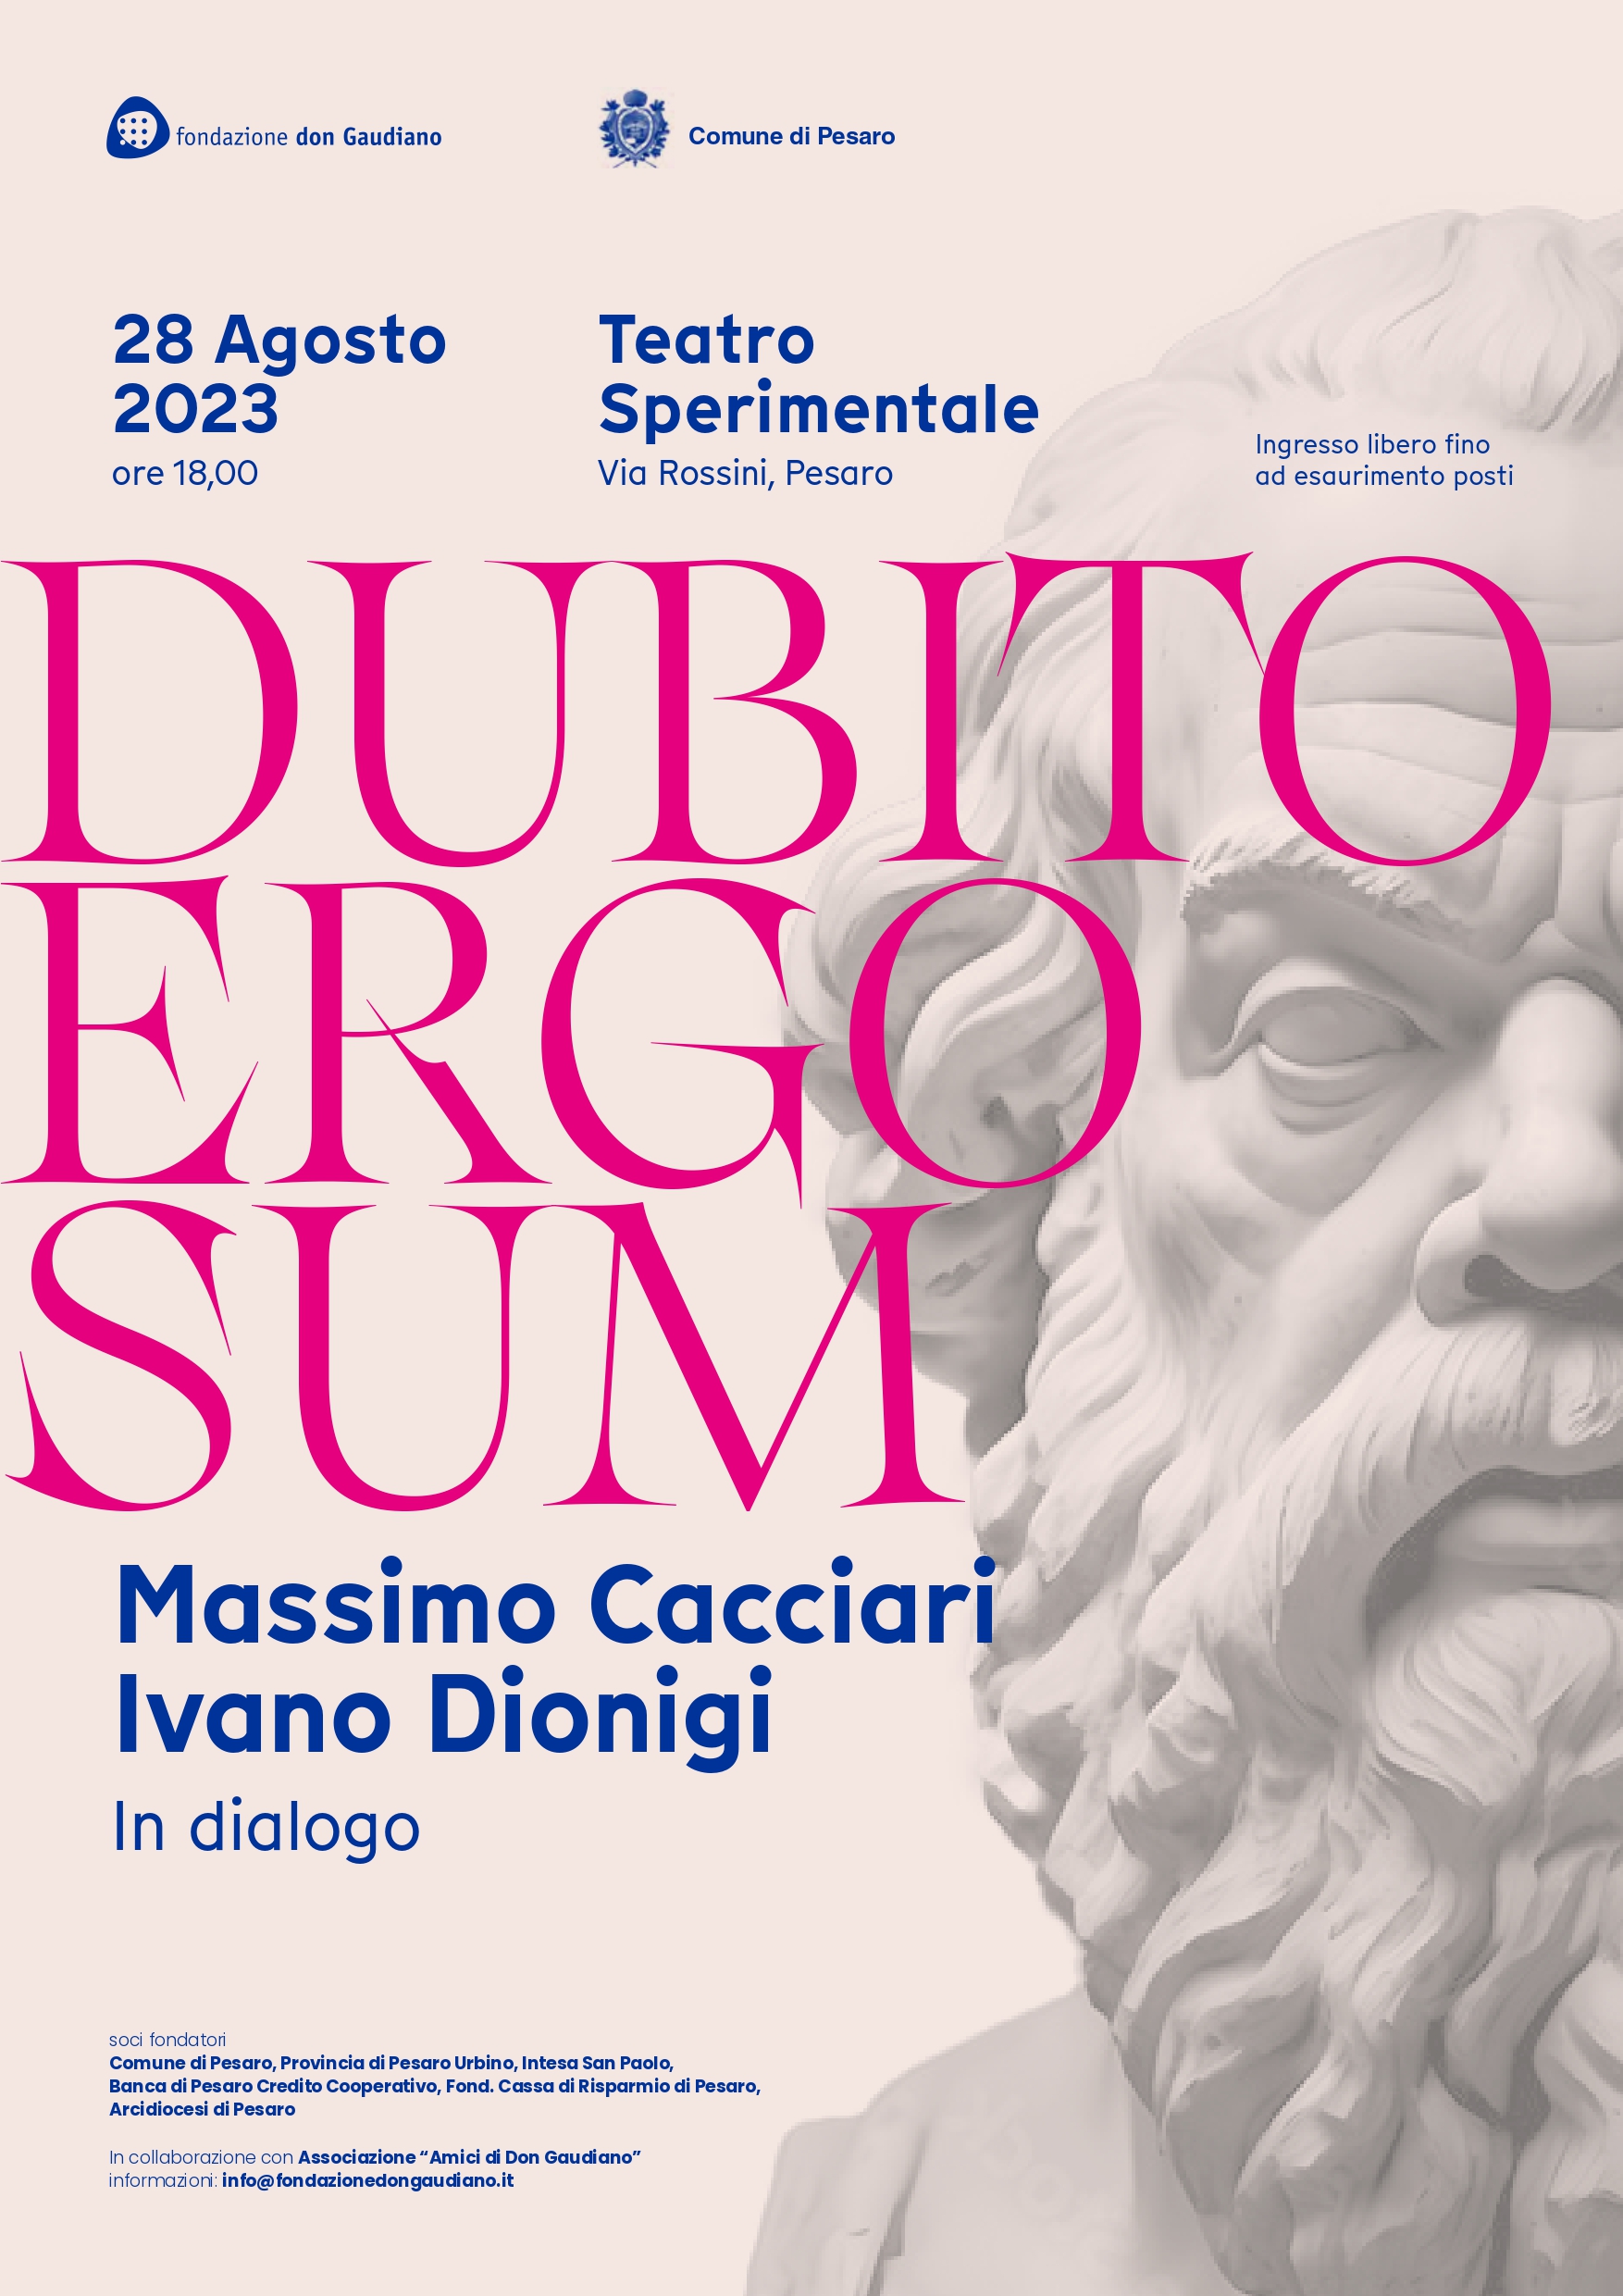 Dubito Ergo Sum | Massimo Cacciari e Ivano Dionigi in dialogo